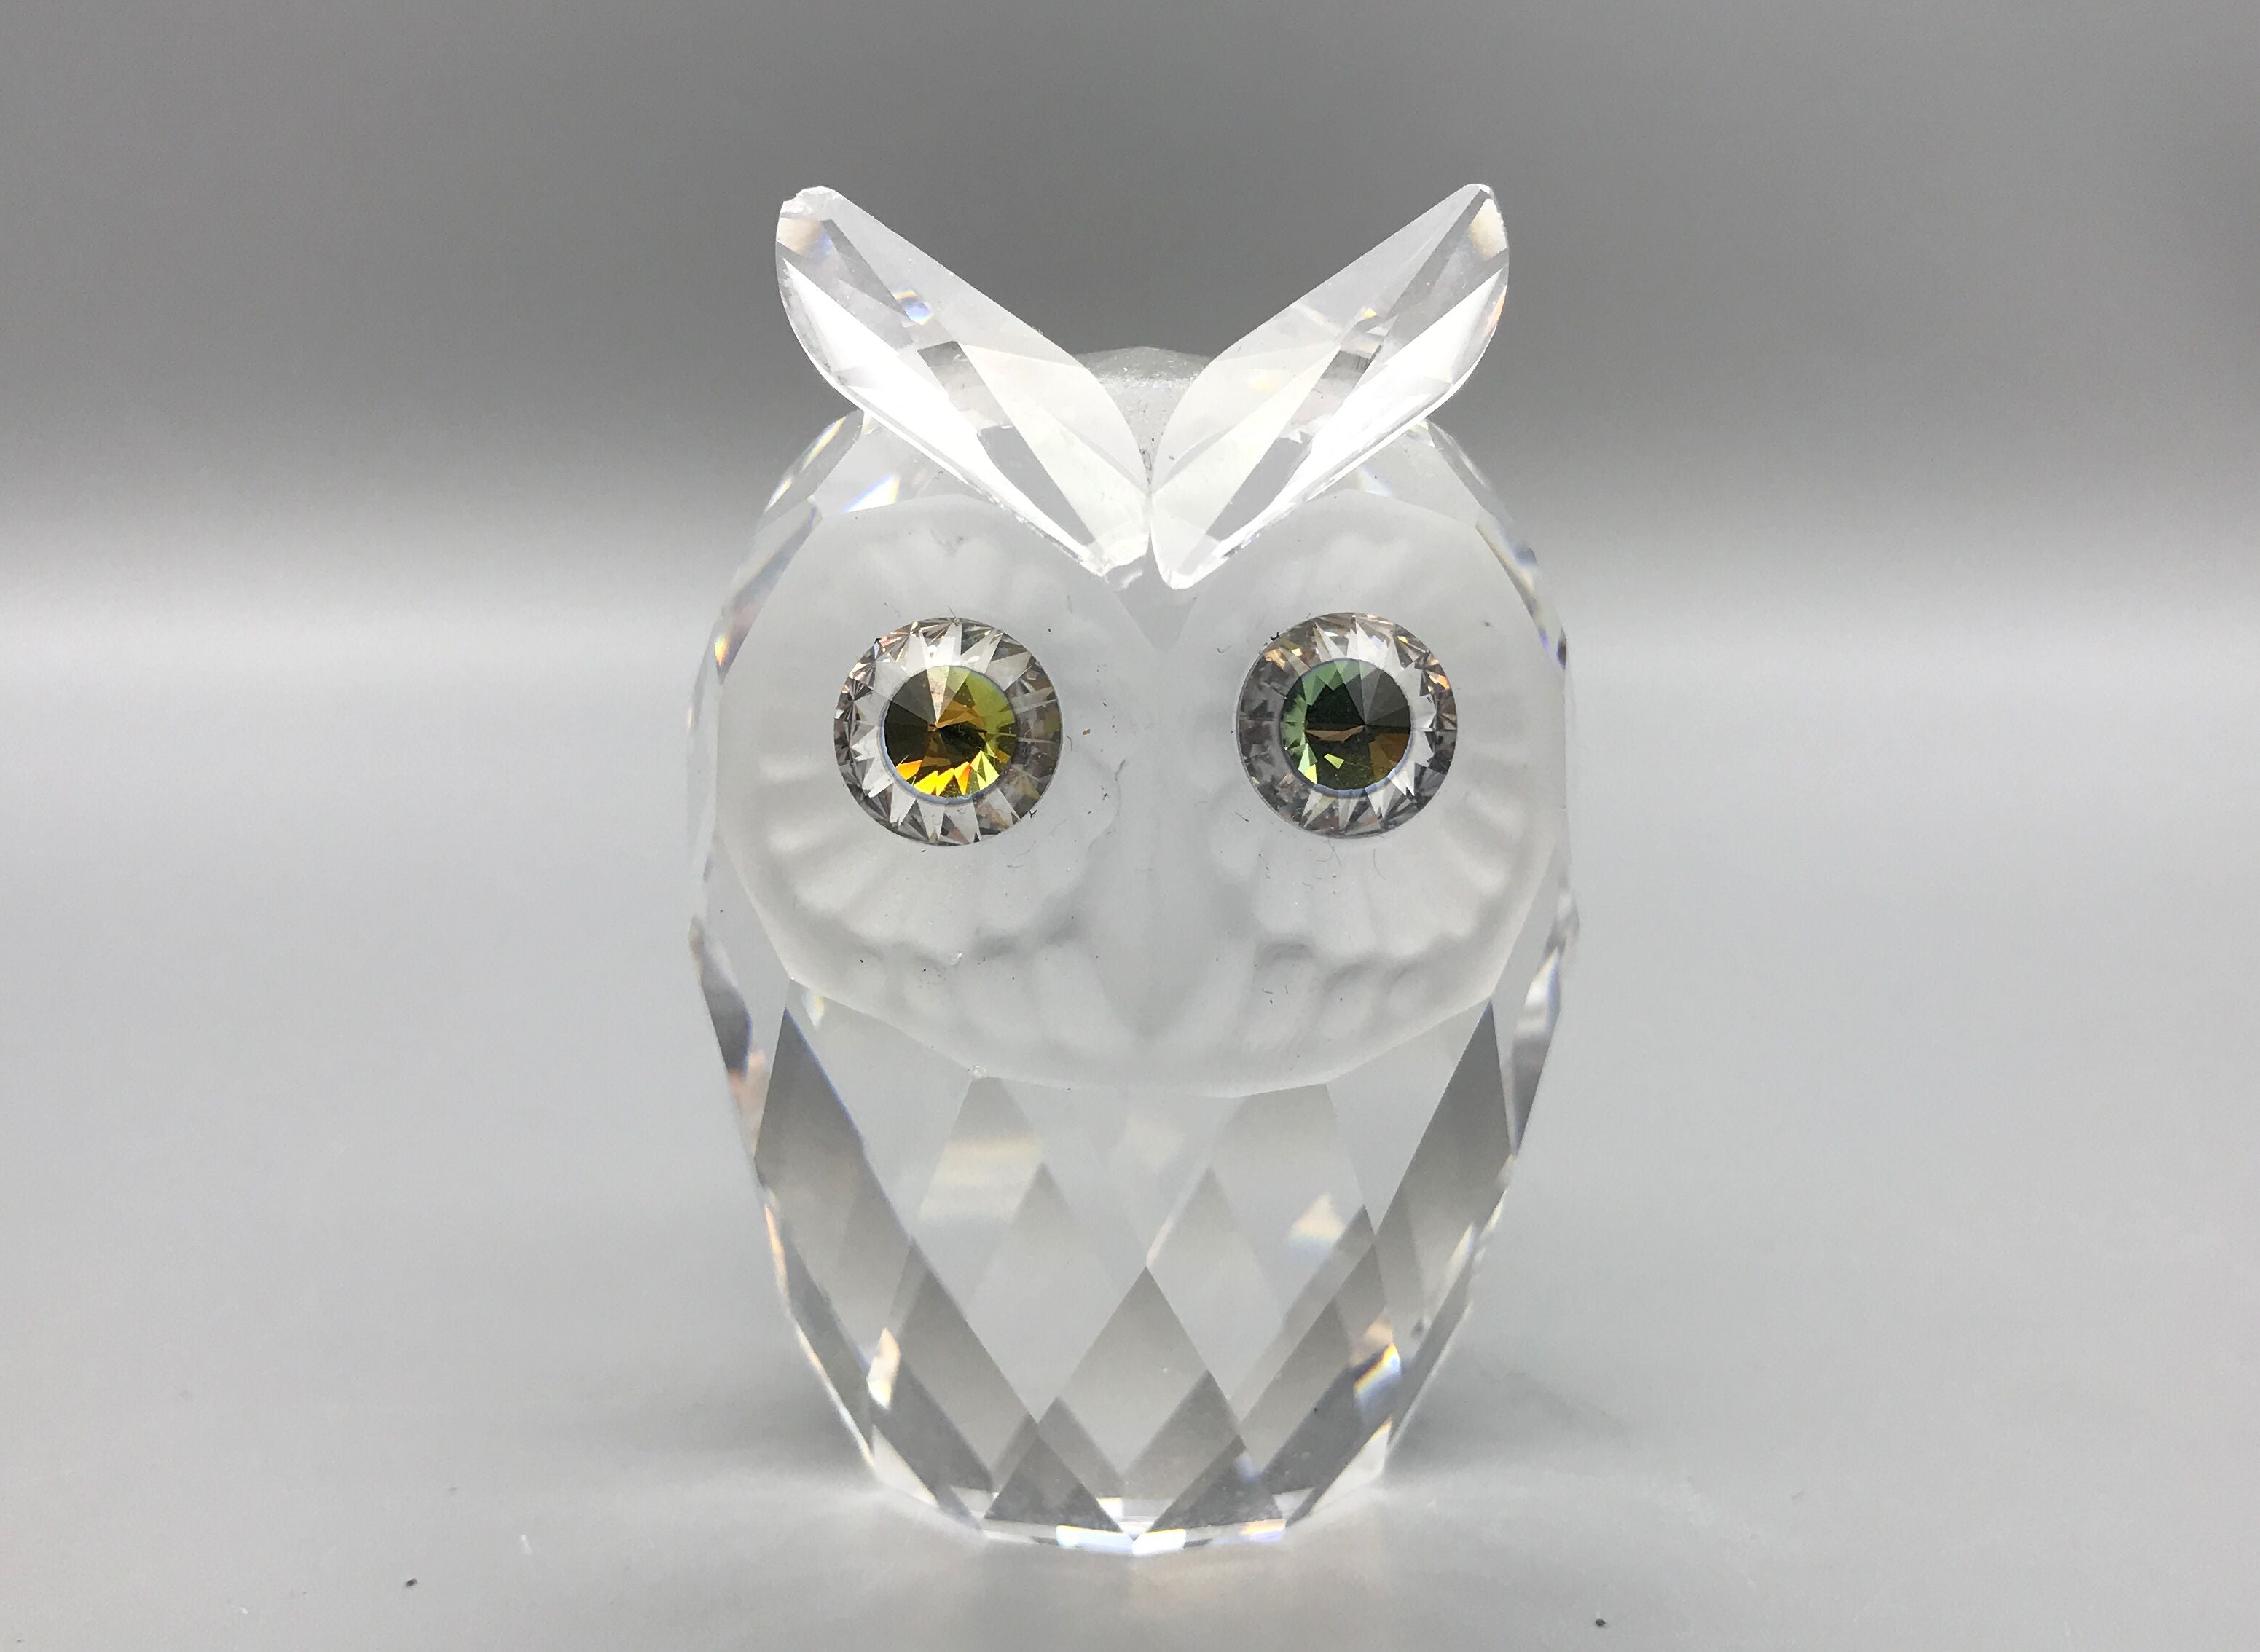 Swarovski: Translucent, Animal Themed: Night Owl, Decorative Glassware